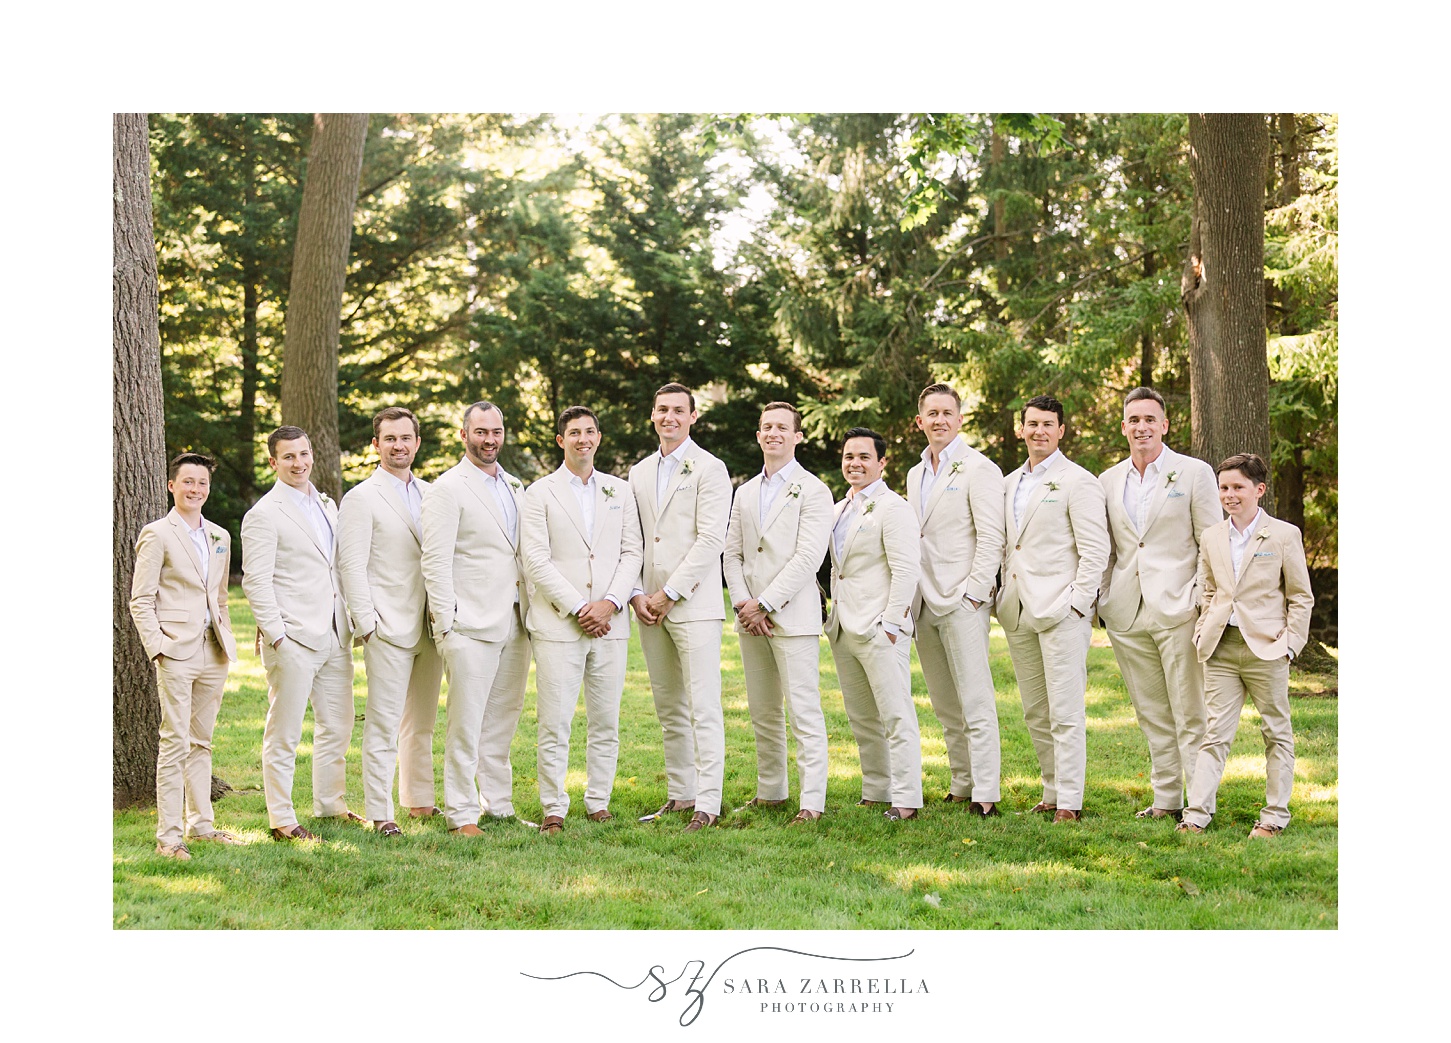 groom poses with groomsmen in tan suits